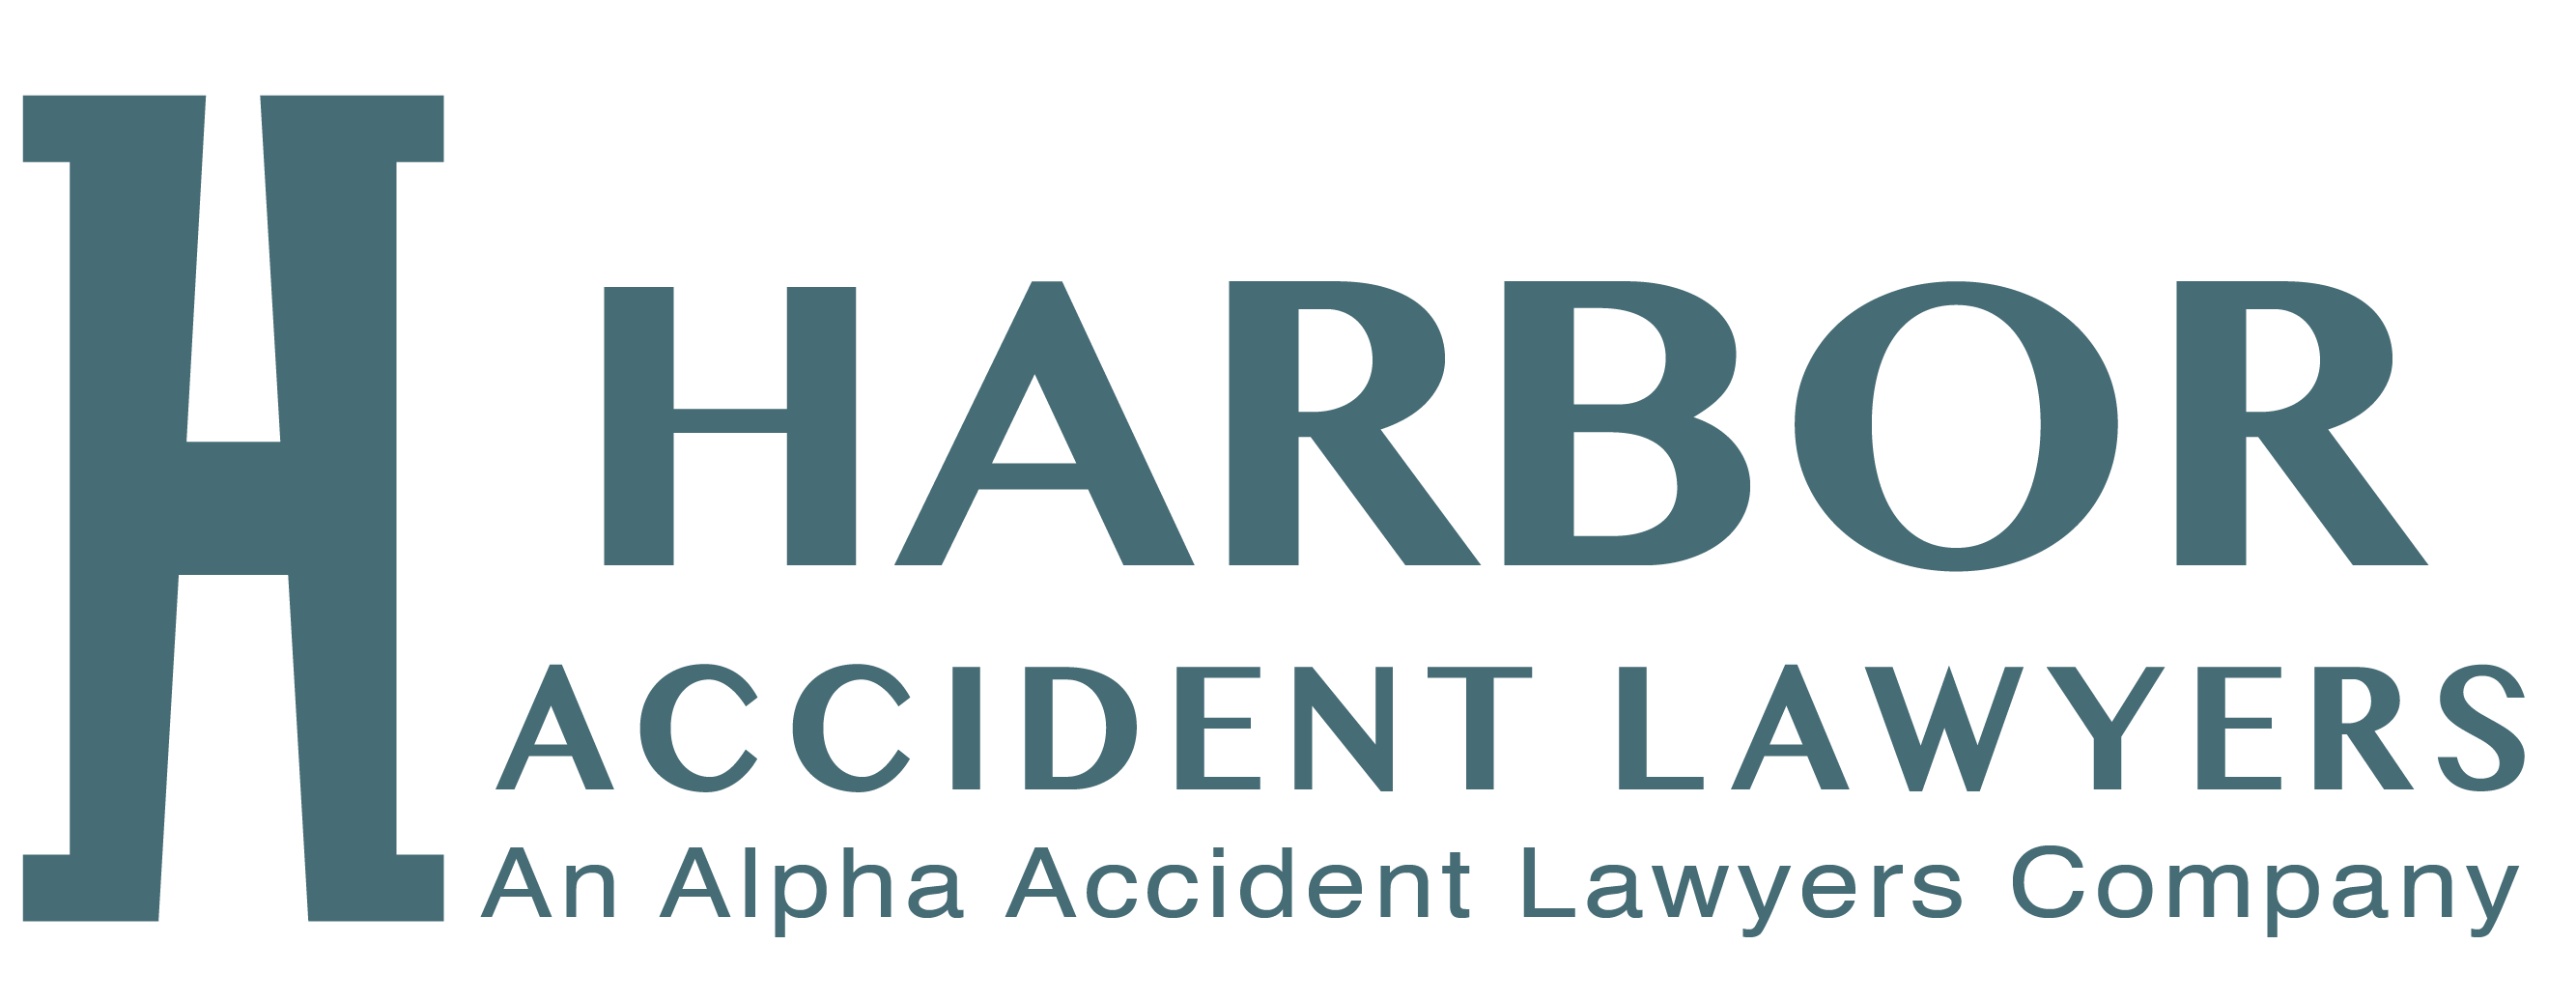 Harbor Accident Lawyers Logo